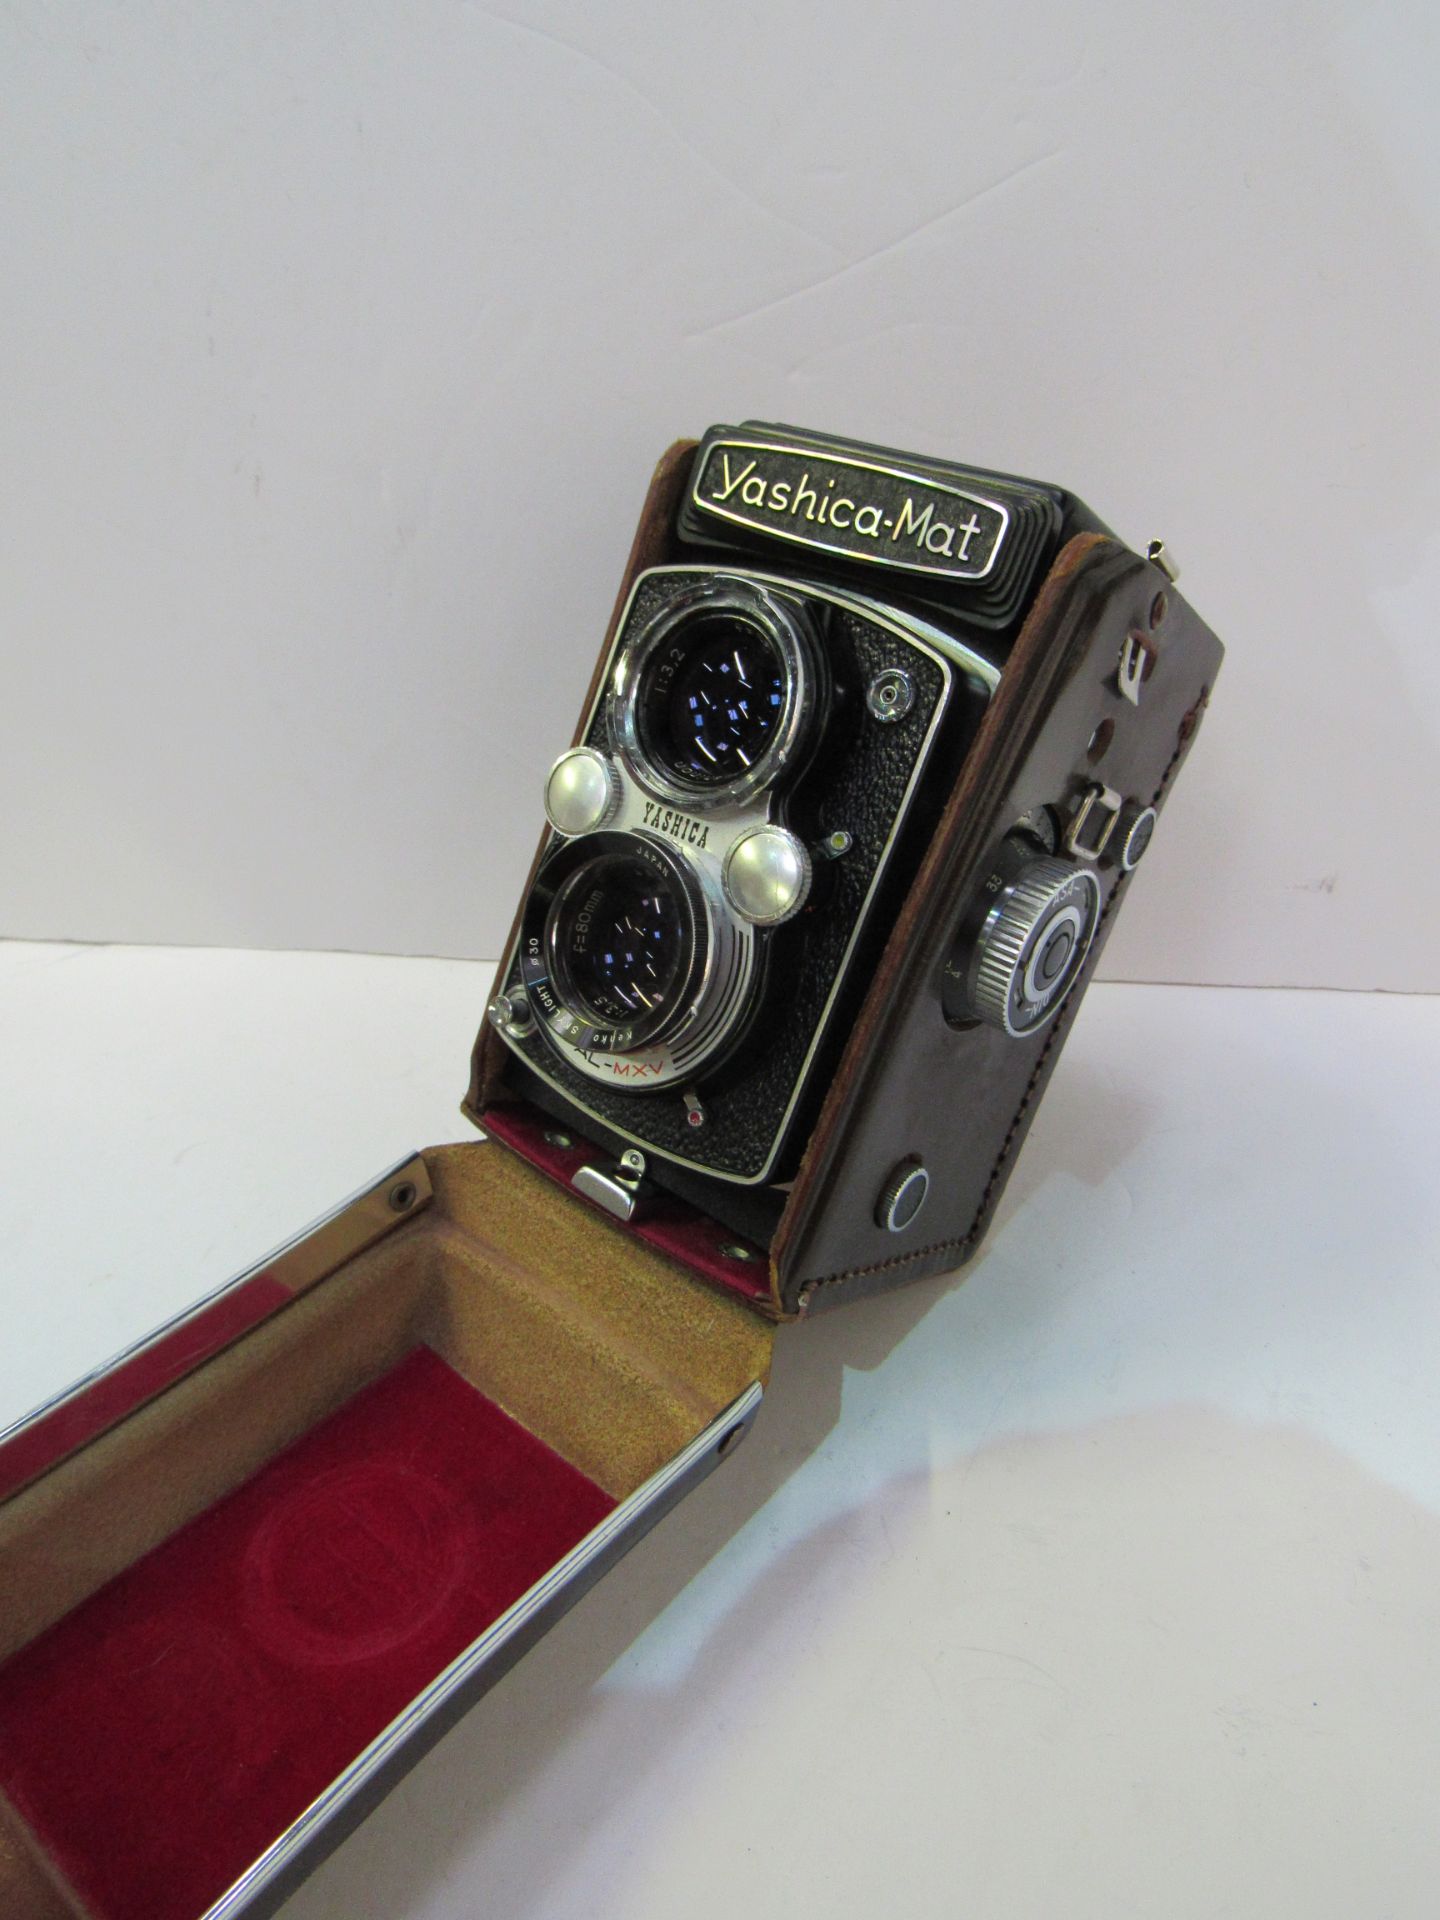 Yashica-Mat Copal-MXV cine camera. Estimate £40-60. - Image 5 of 5